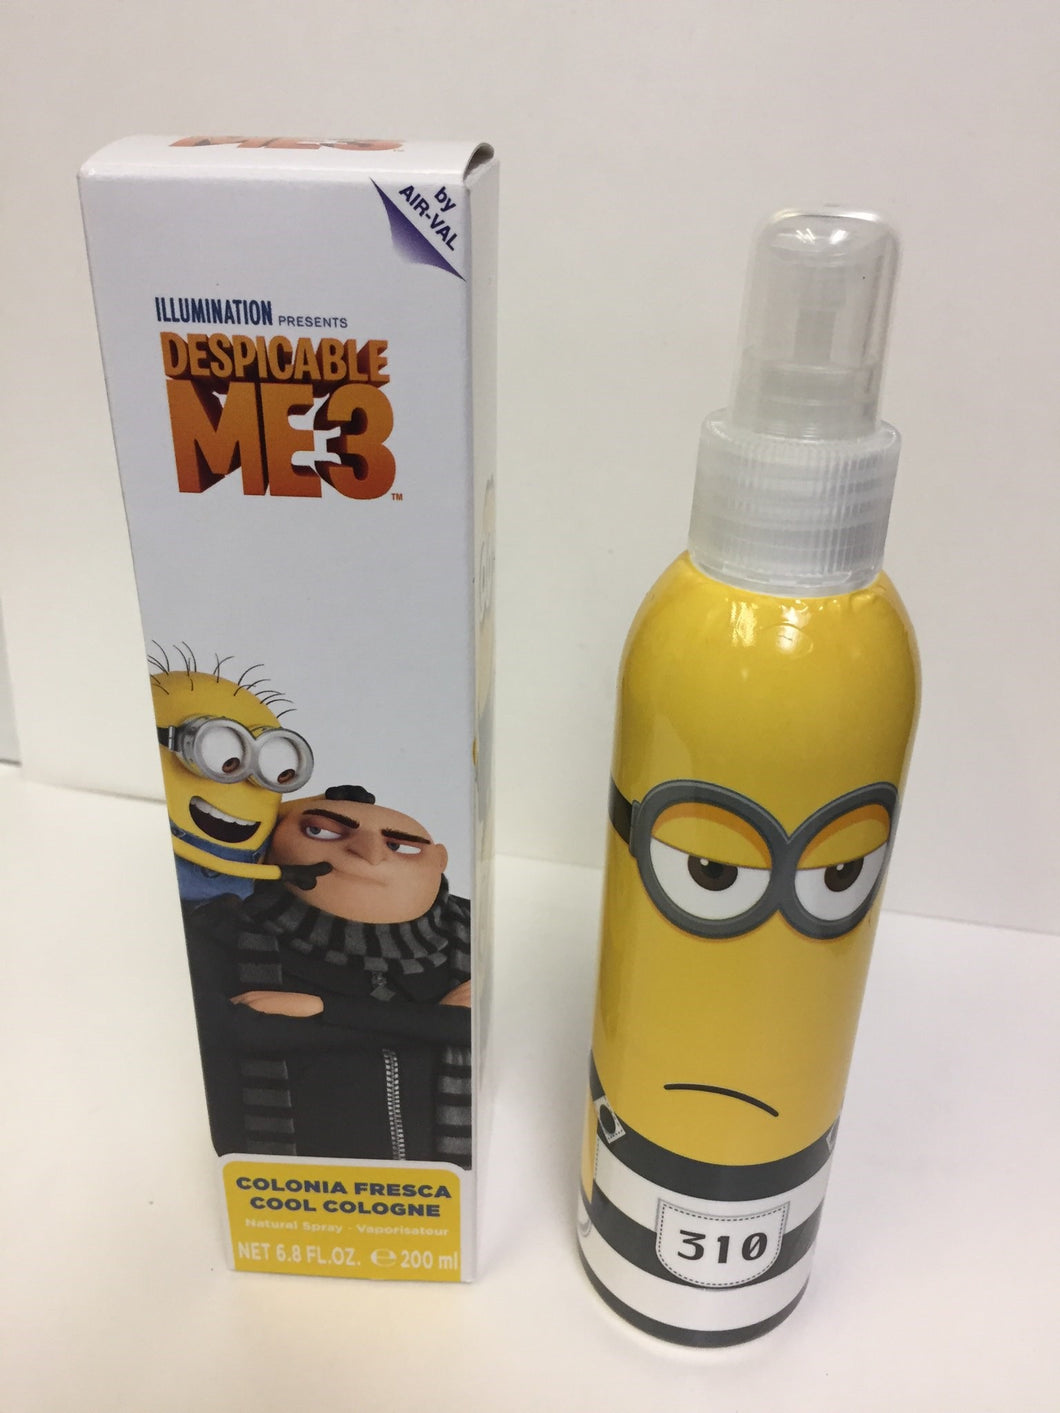 Kids Minion Cool Cologne Despicable Me3 6.8 oz Spray